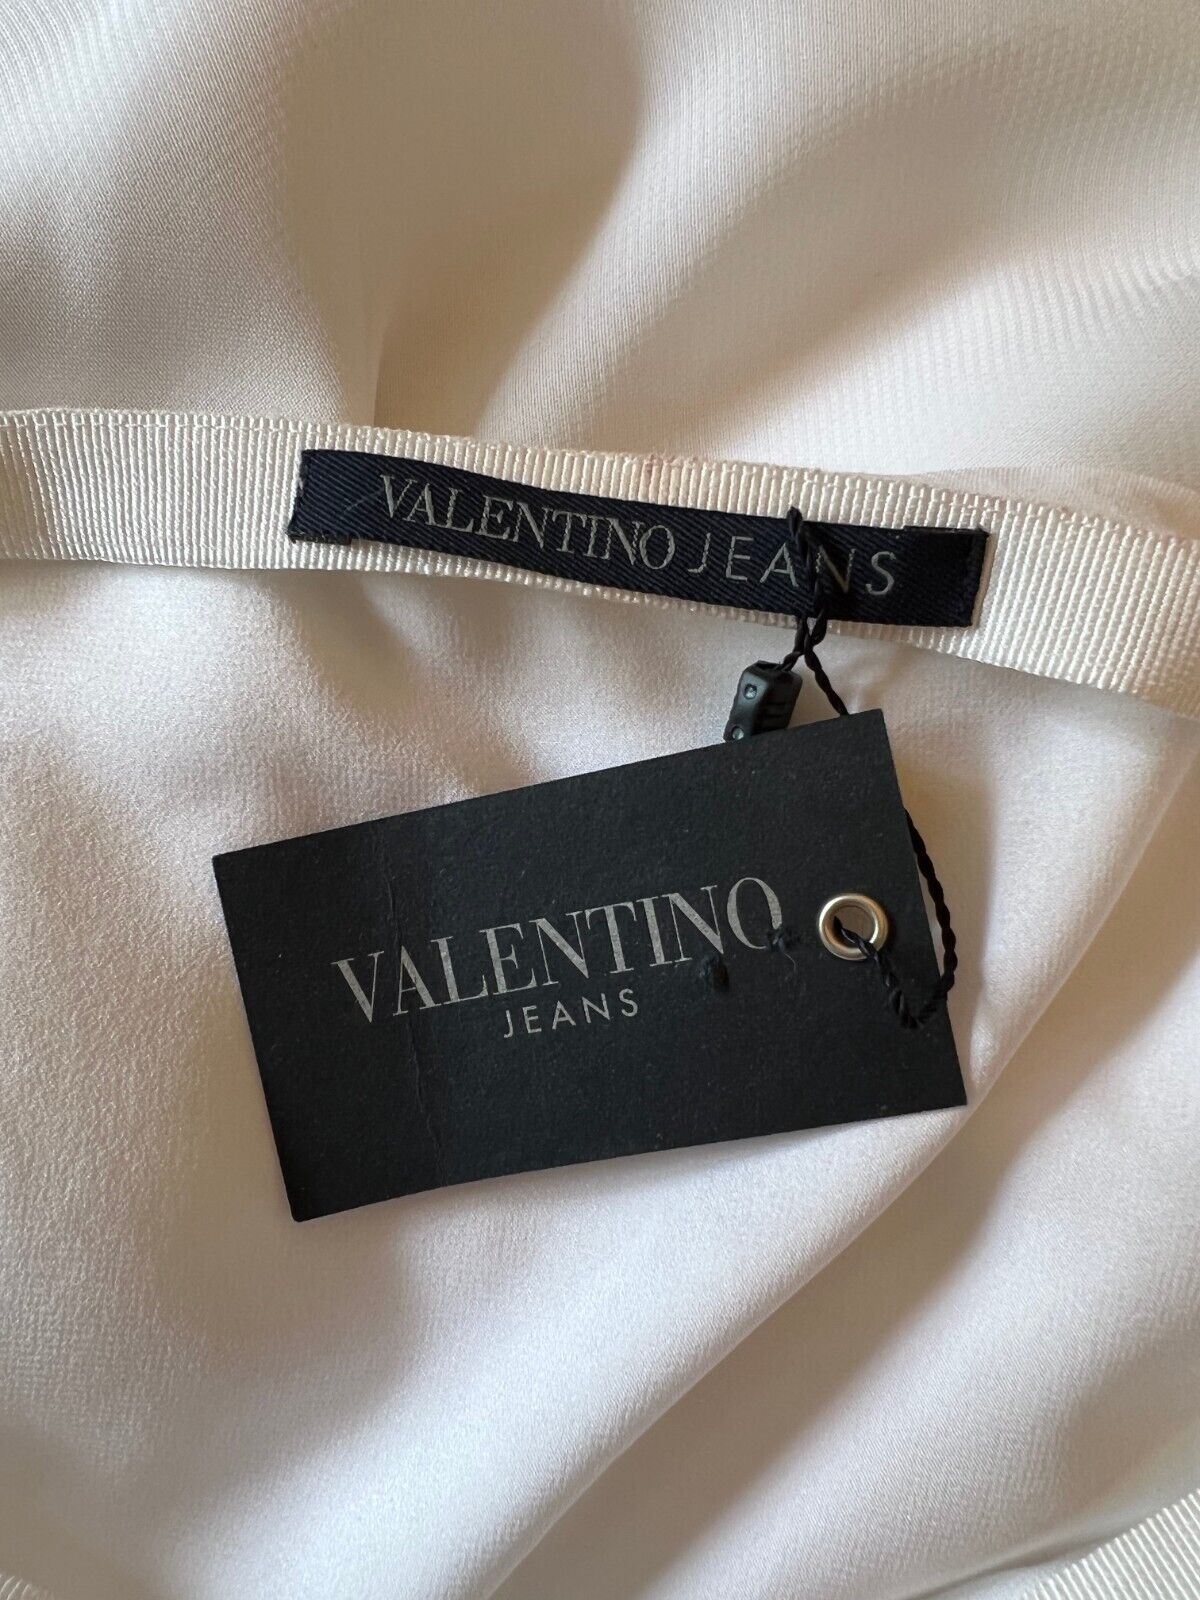 Valentino Jeans Women's White & Black Floral Chiffon Skirt UK 10 EU 38 US 8 IT 42 Timeless Fashions